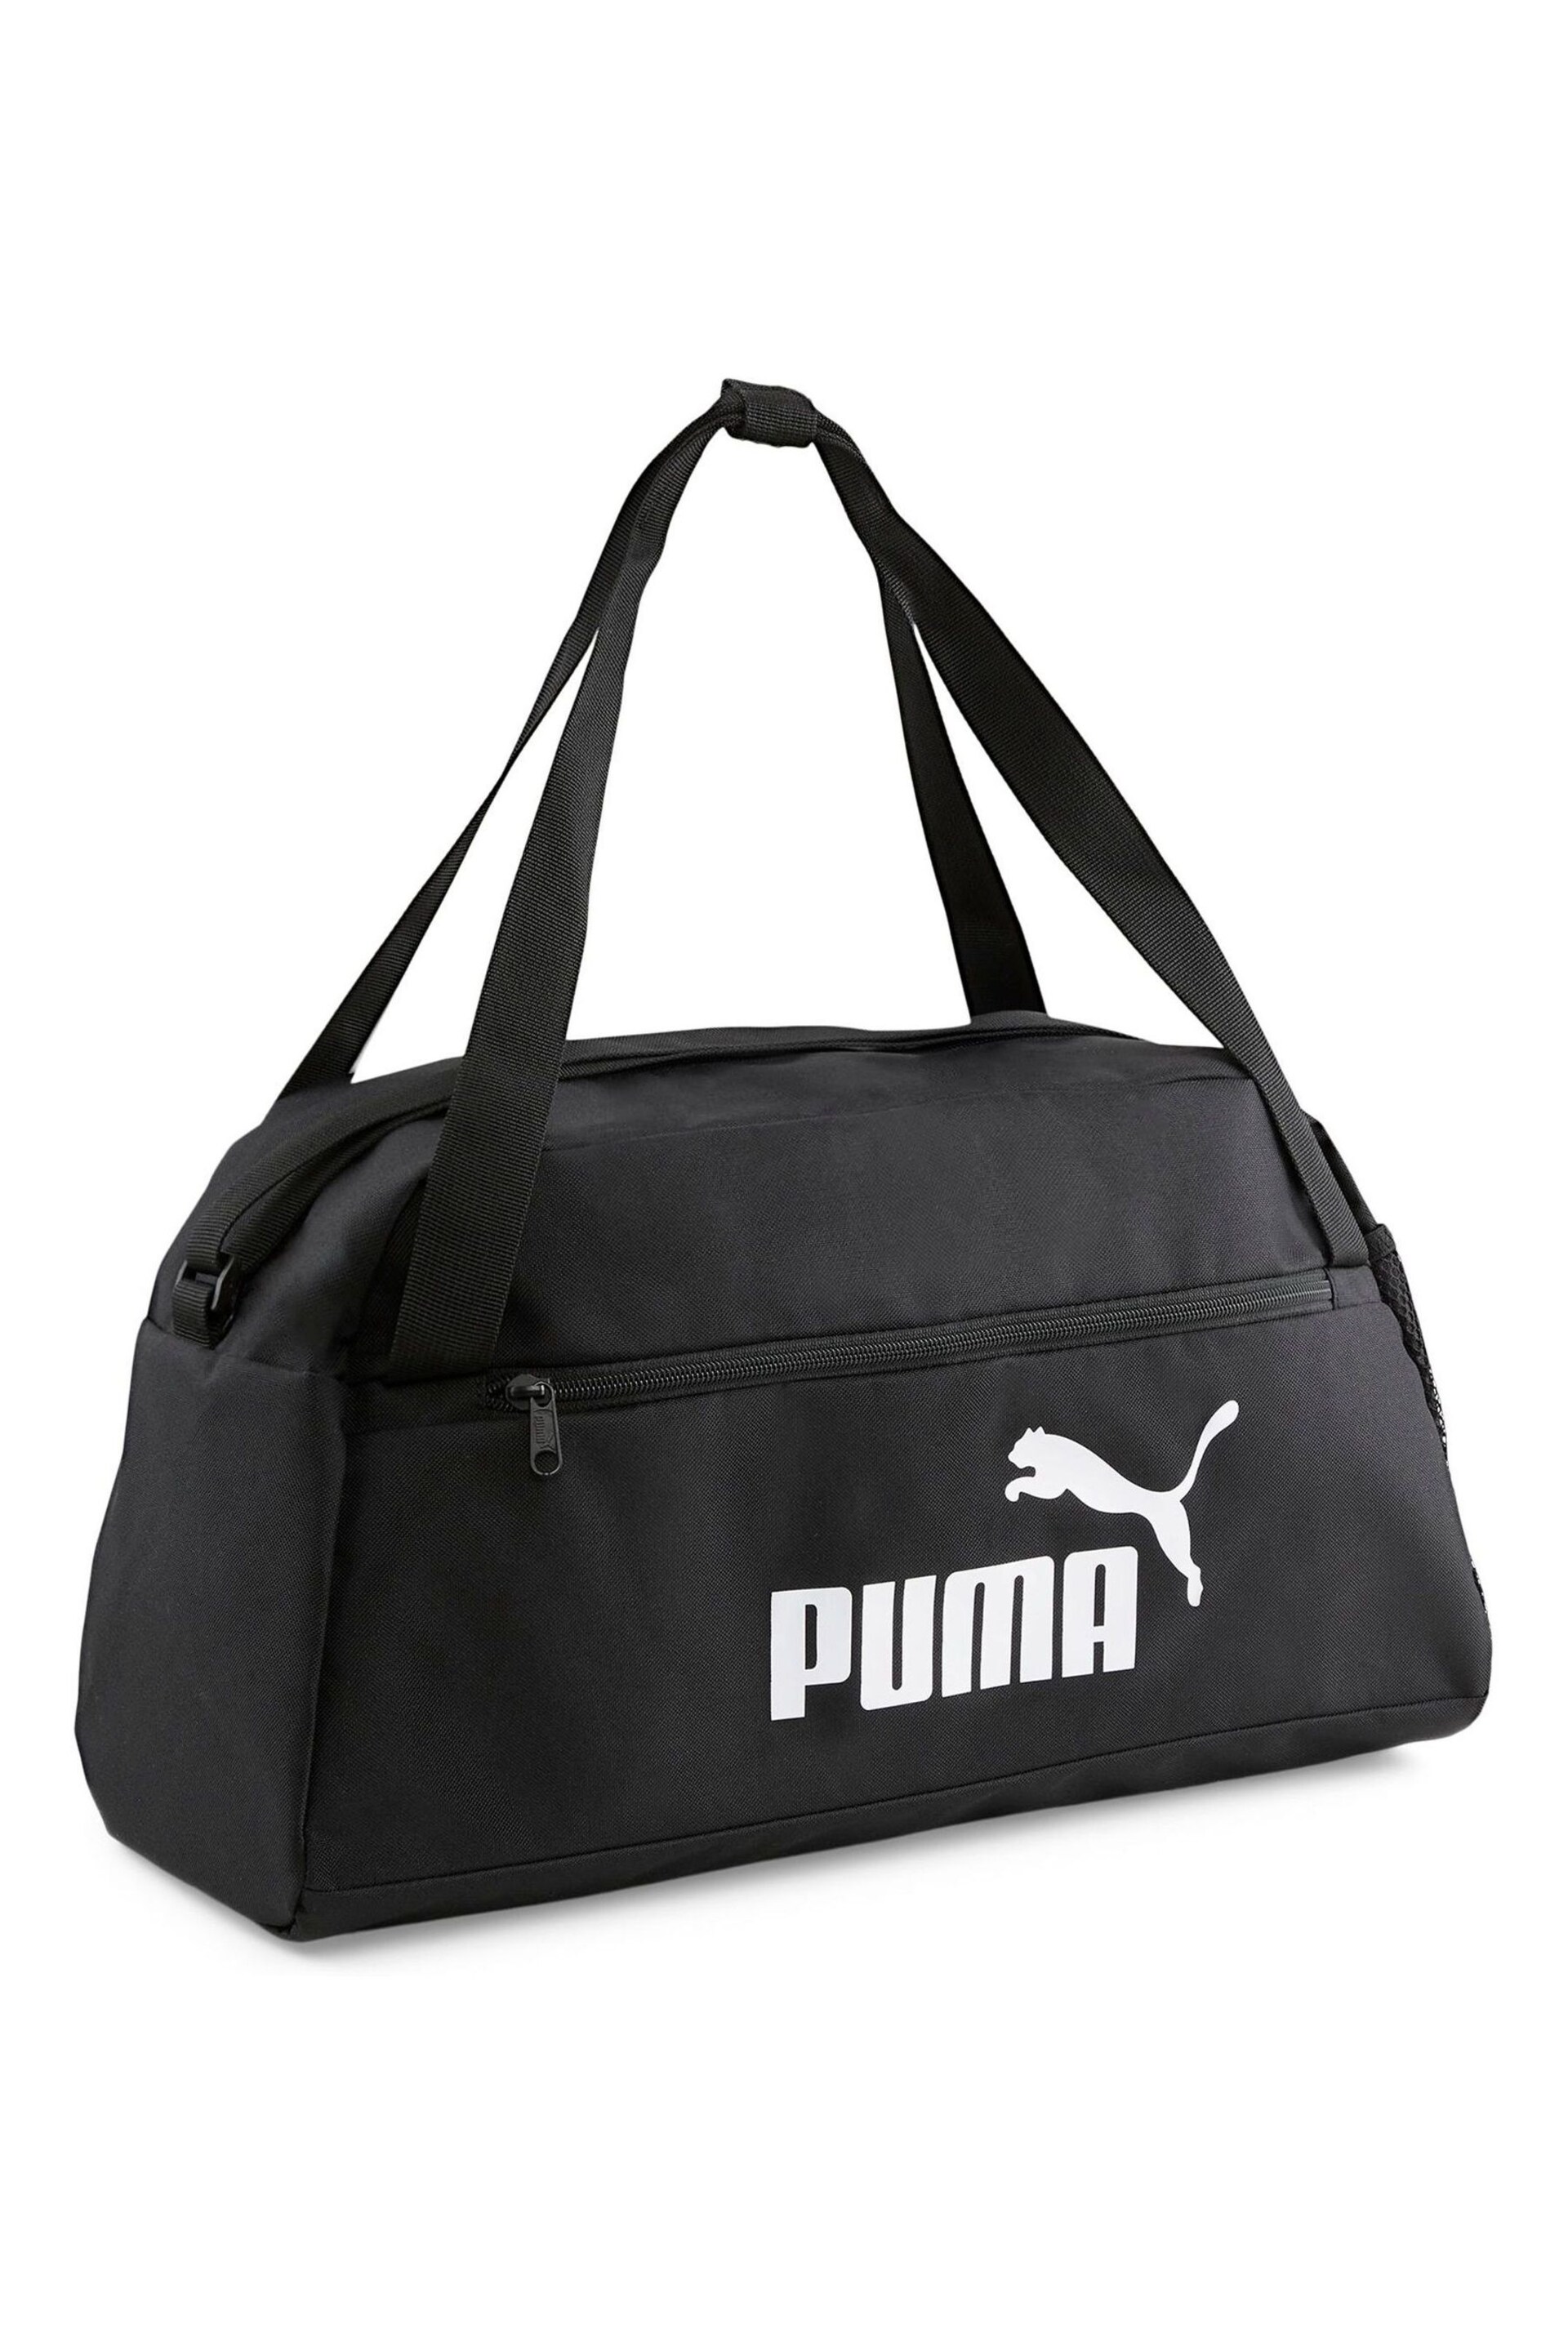 Puma Black Phase Sports Bag - Image 1 of 5